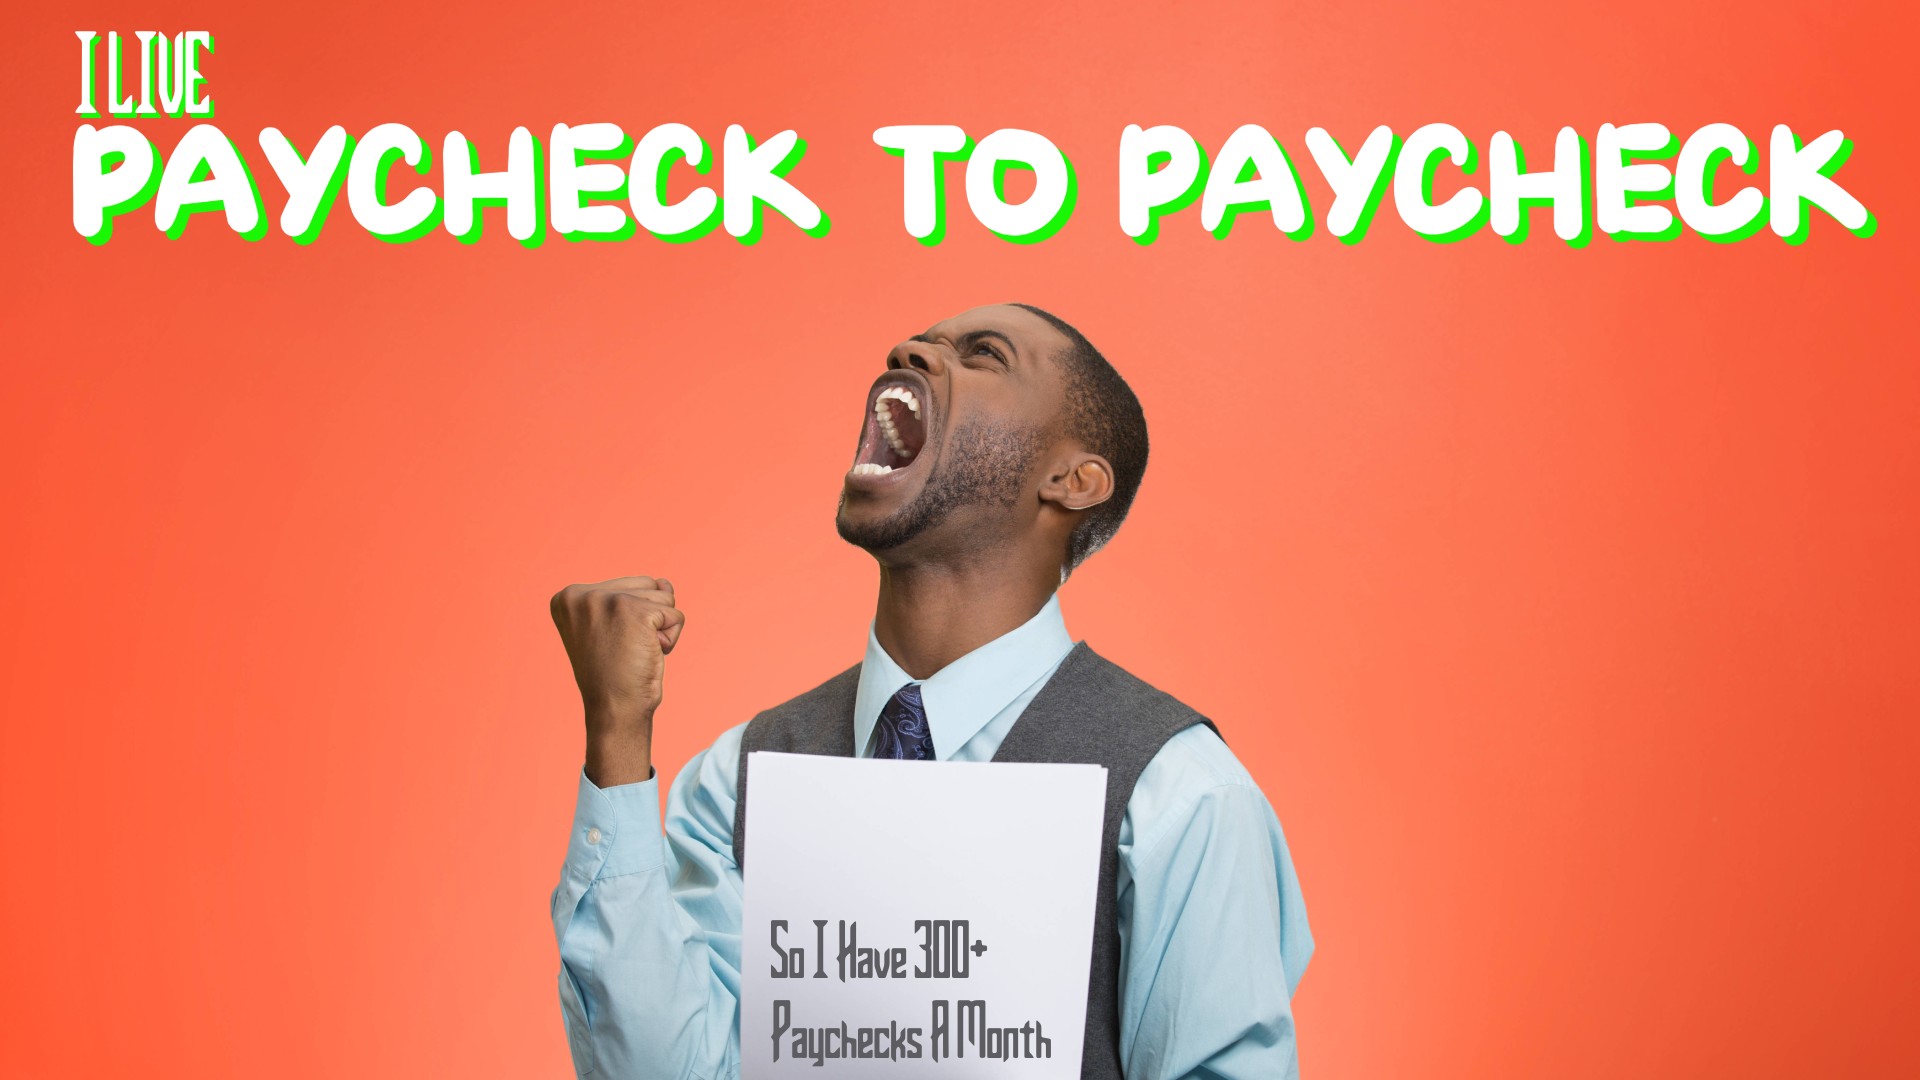 I Live Paycheck to Paycheck…So I have 300+ Paychecks a Month